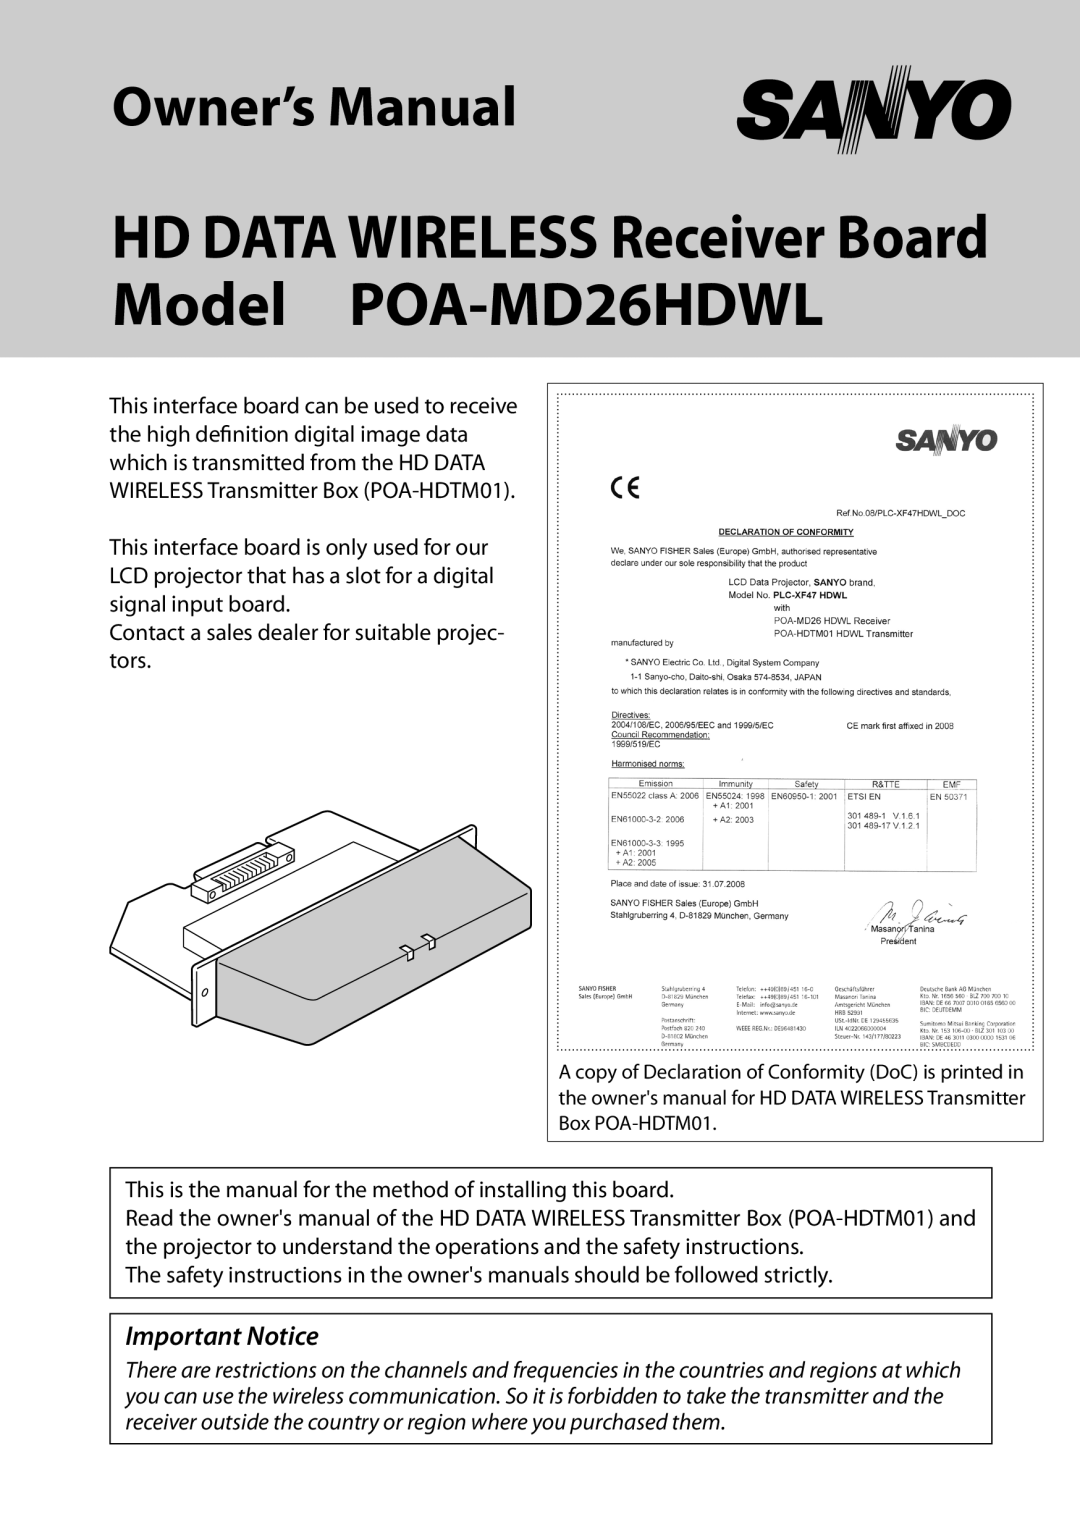 Sanyo POA-MD26HDWL owner manual Important Notice, Contact a sales dealer for suitable projec- tors, Owner’s Manual 